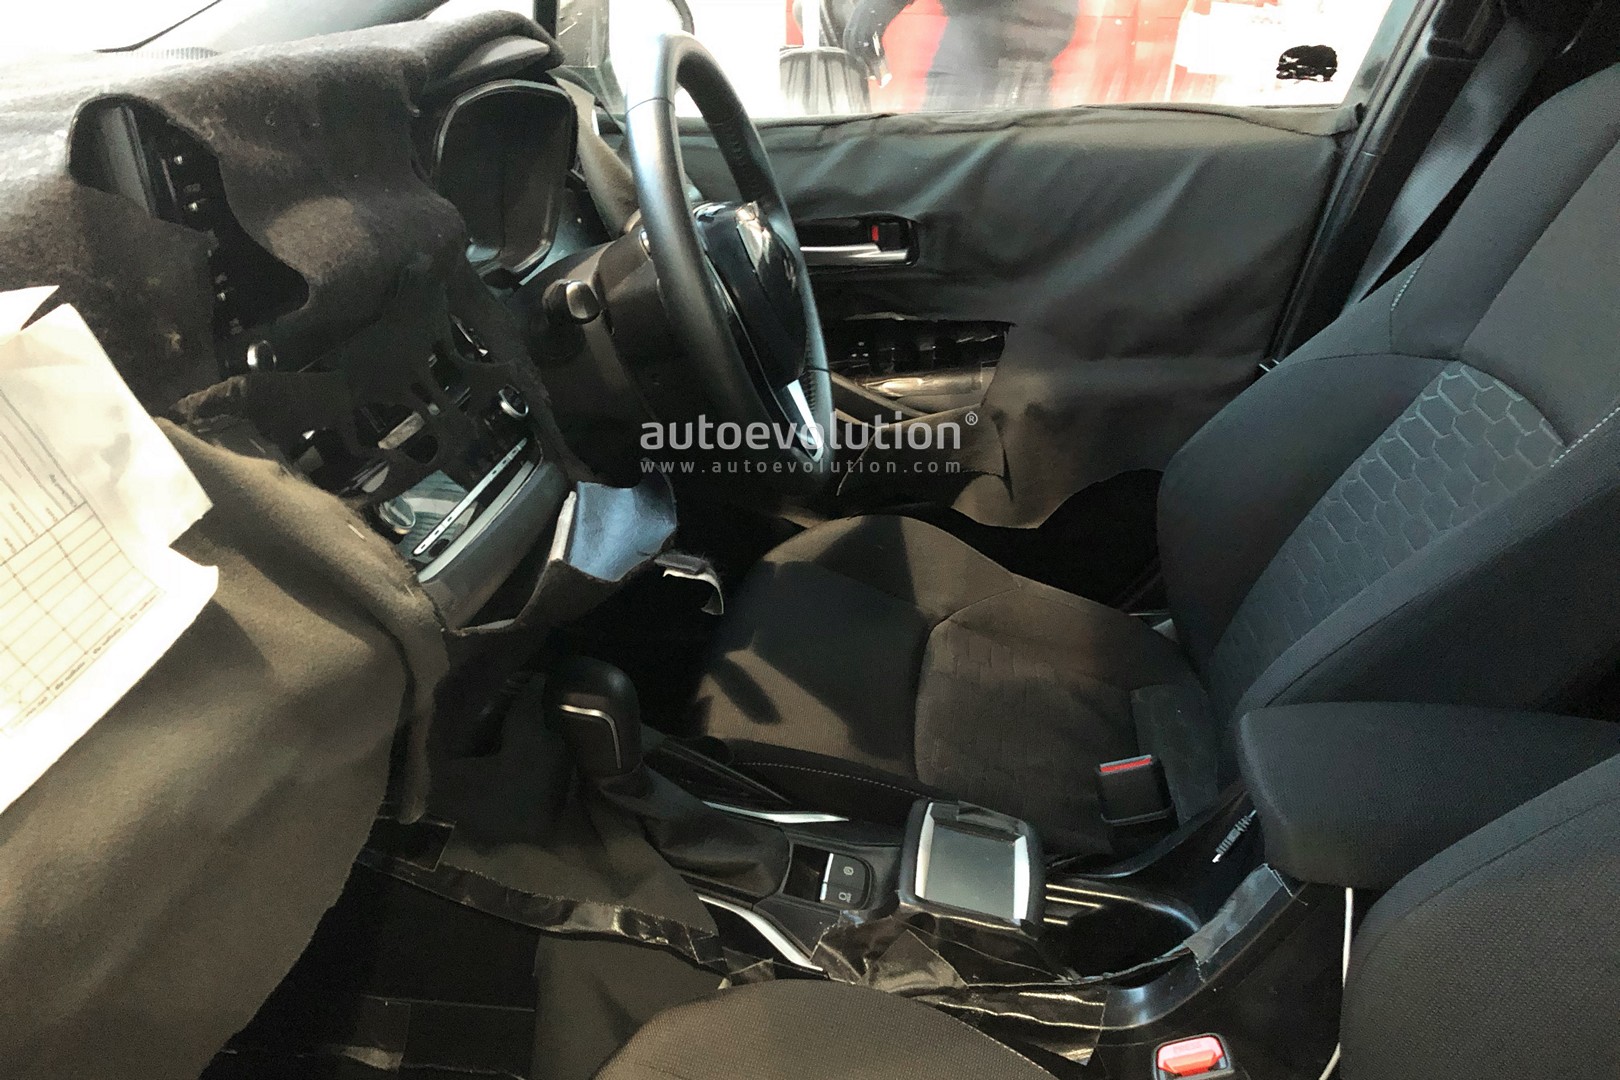 2019 New Toyota Auris Exterior and Interior 